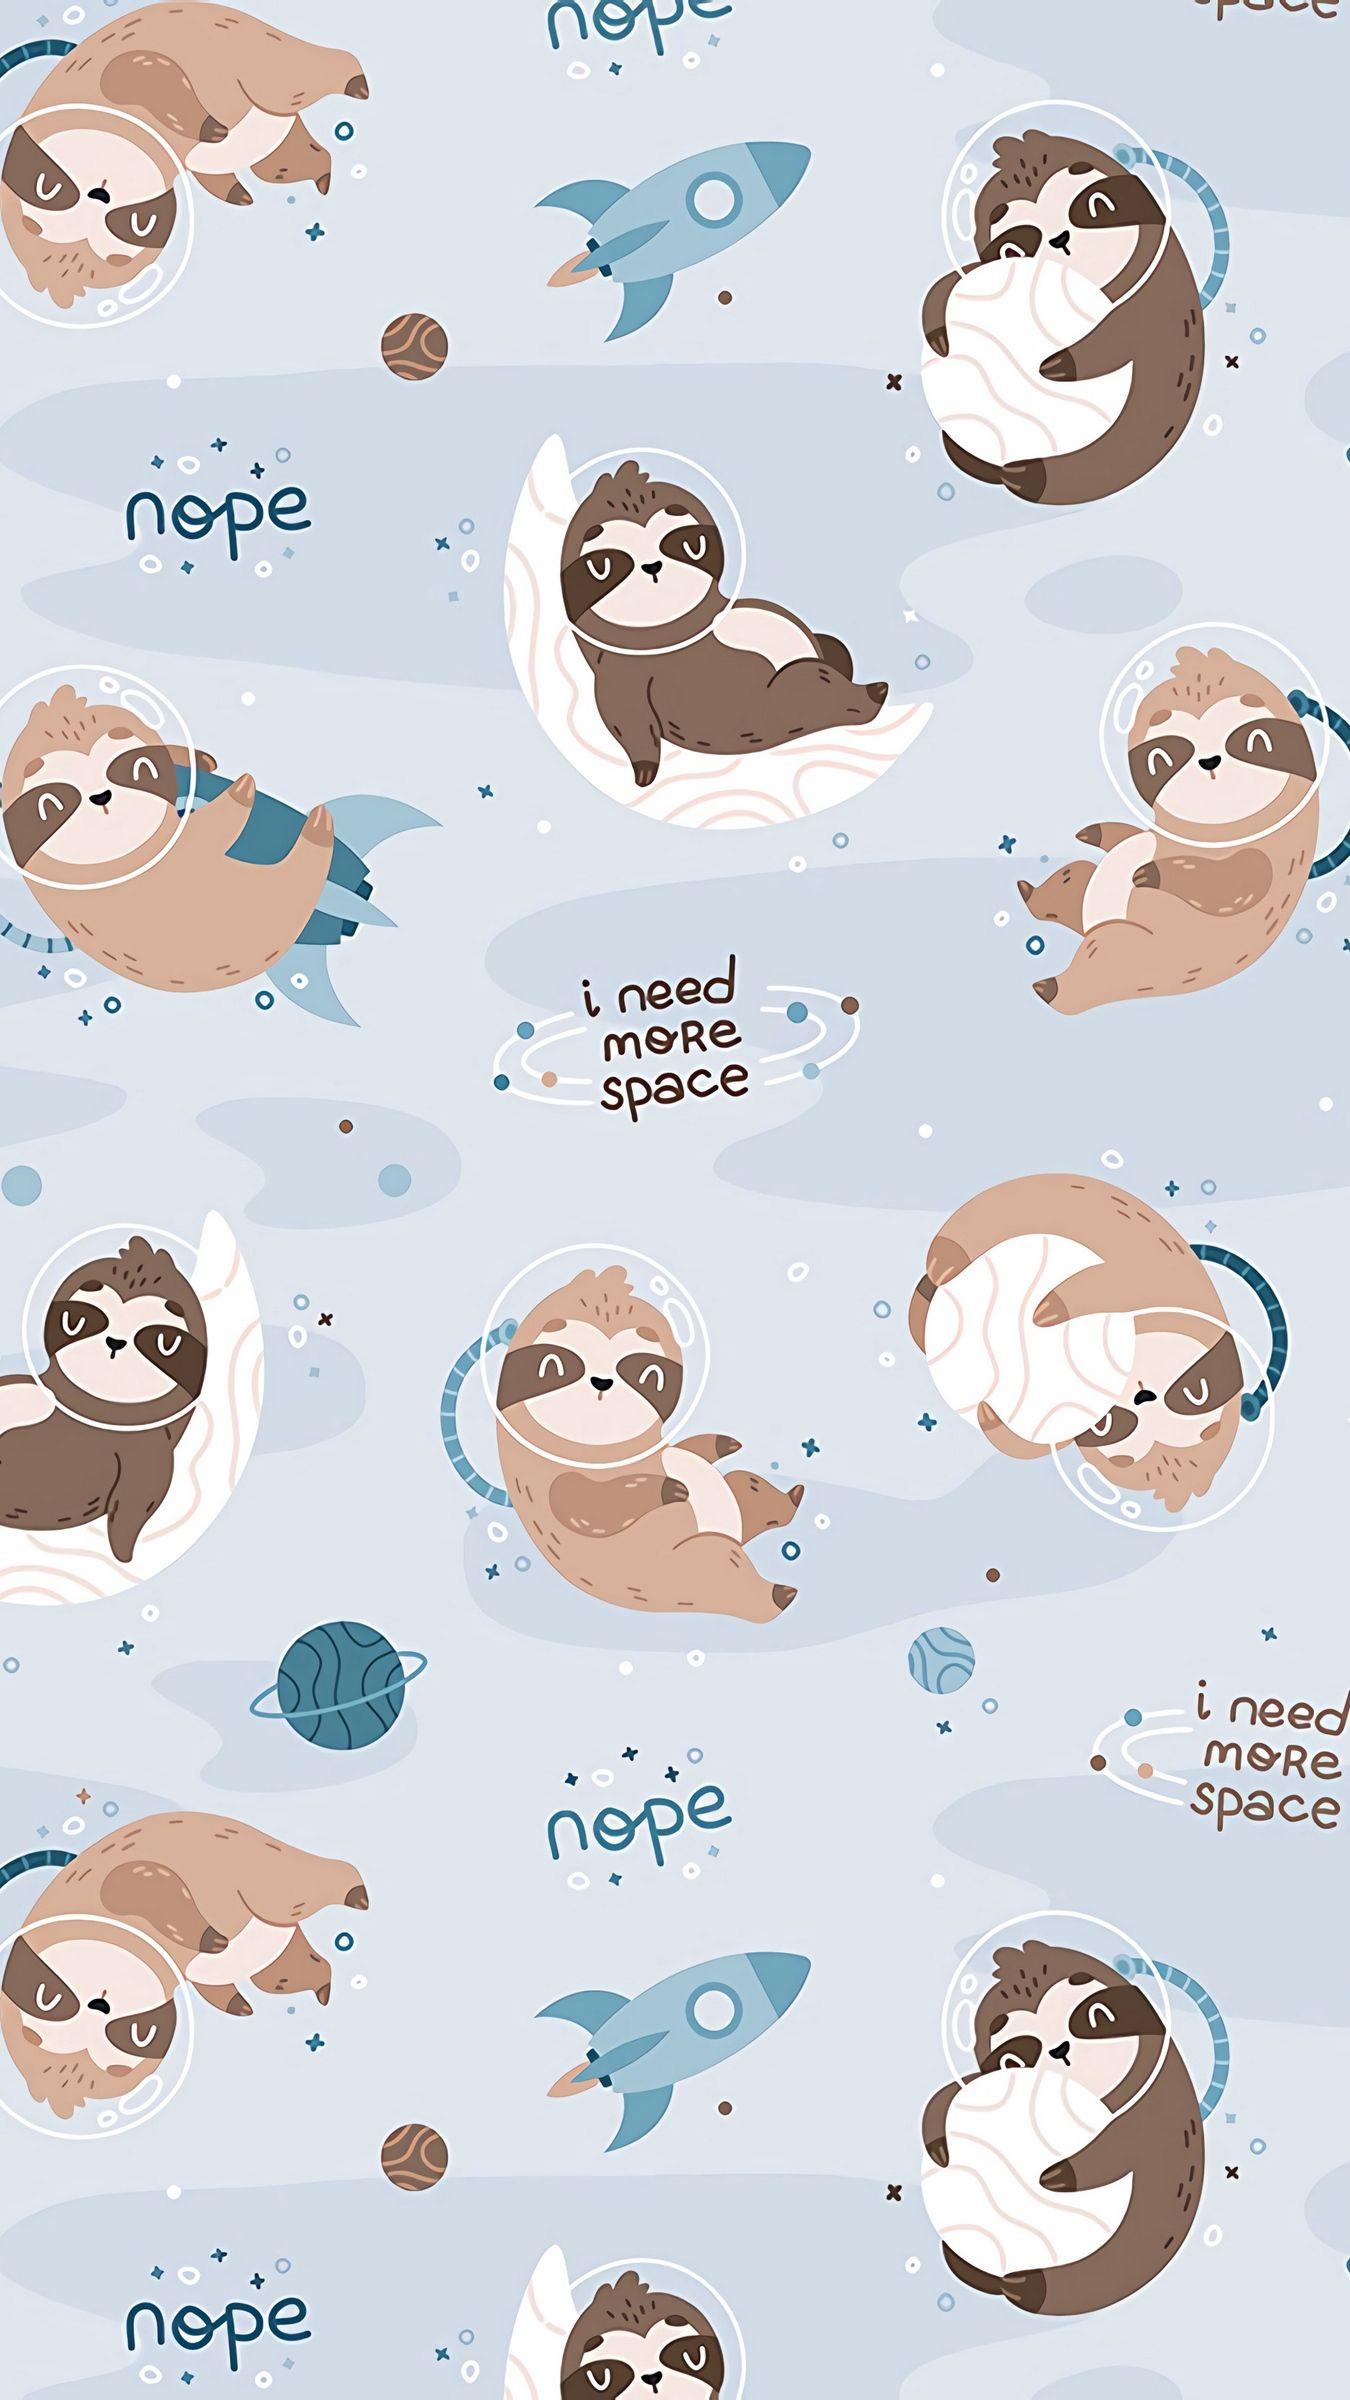 sloth wallpaper free